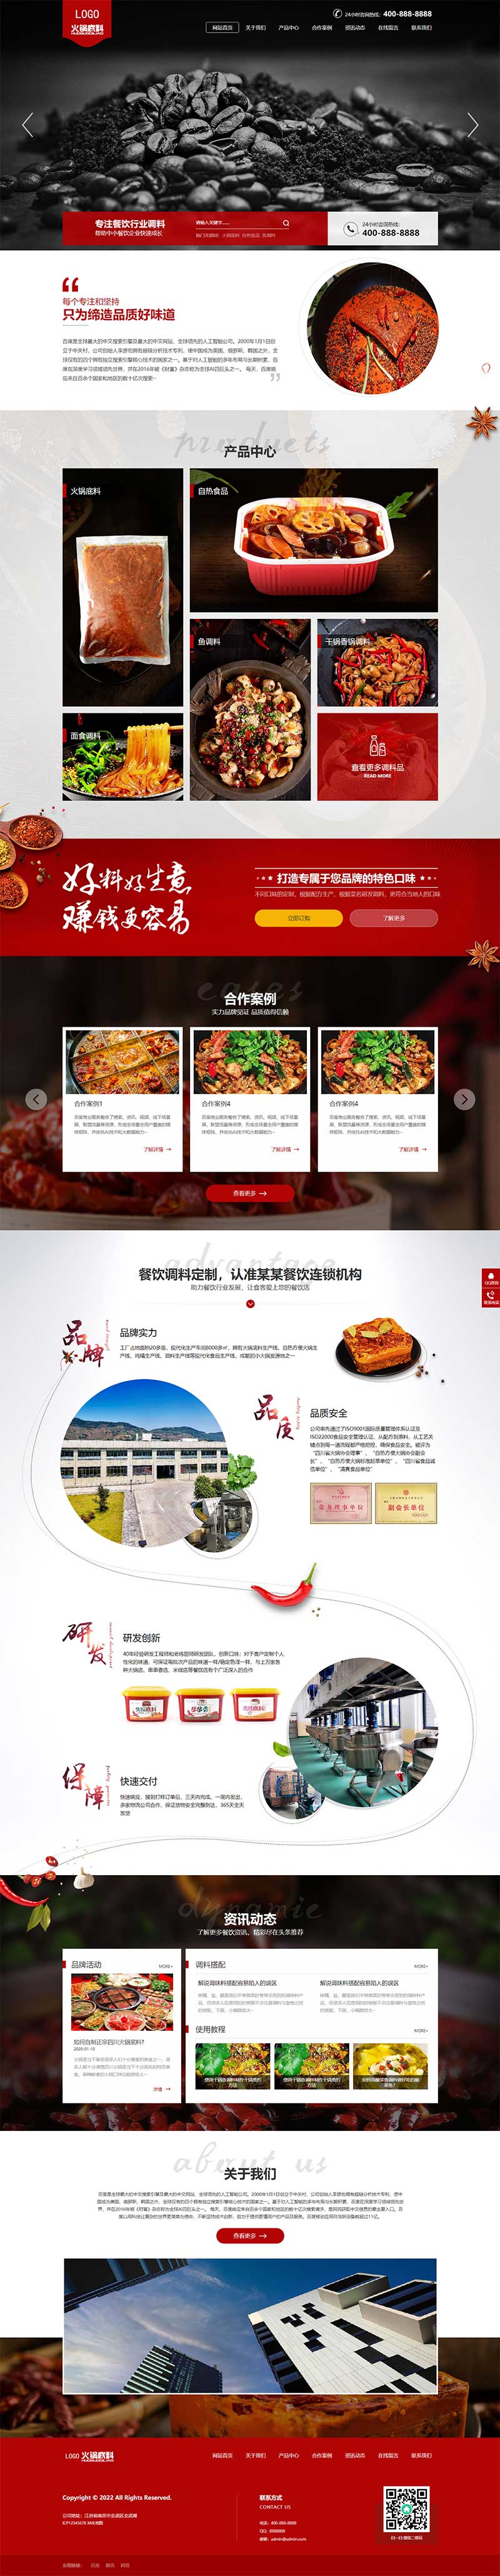 (PC+WAP)pbootcms高端火锅底料食品调料网站模板 营销型餐饮美食网站源码下载